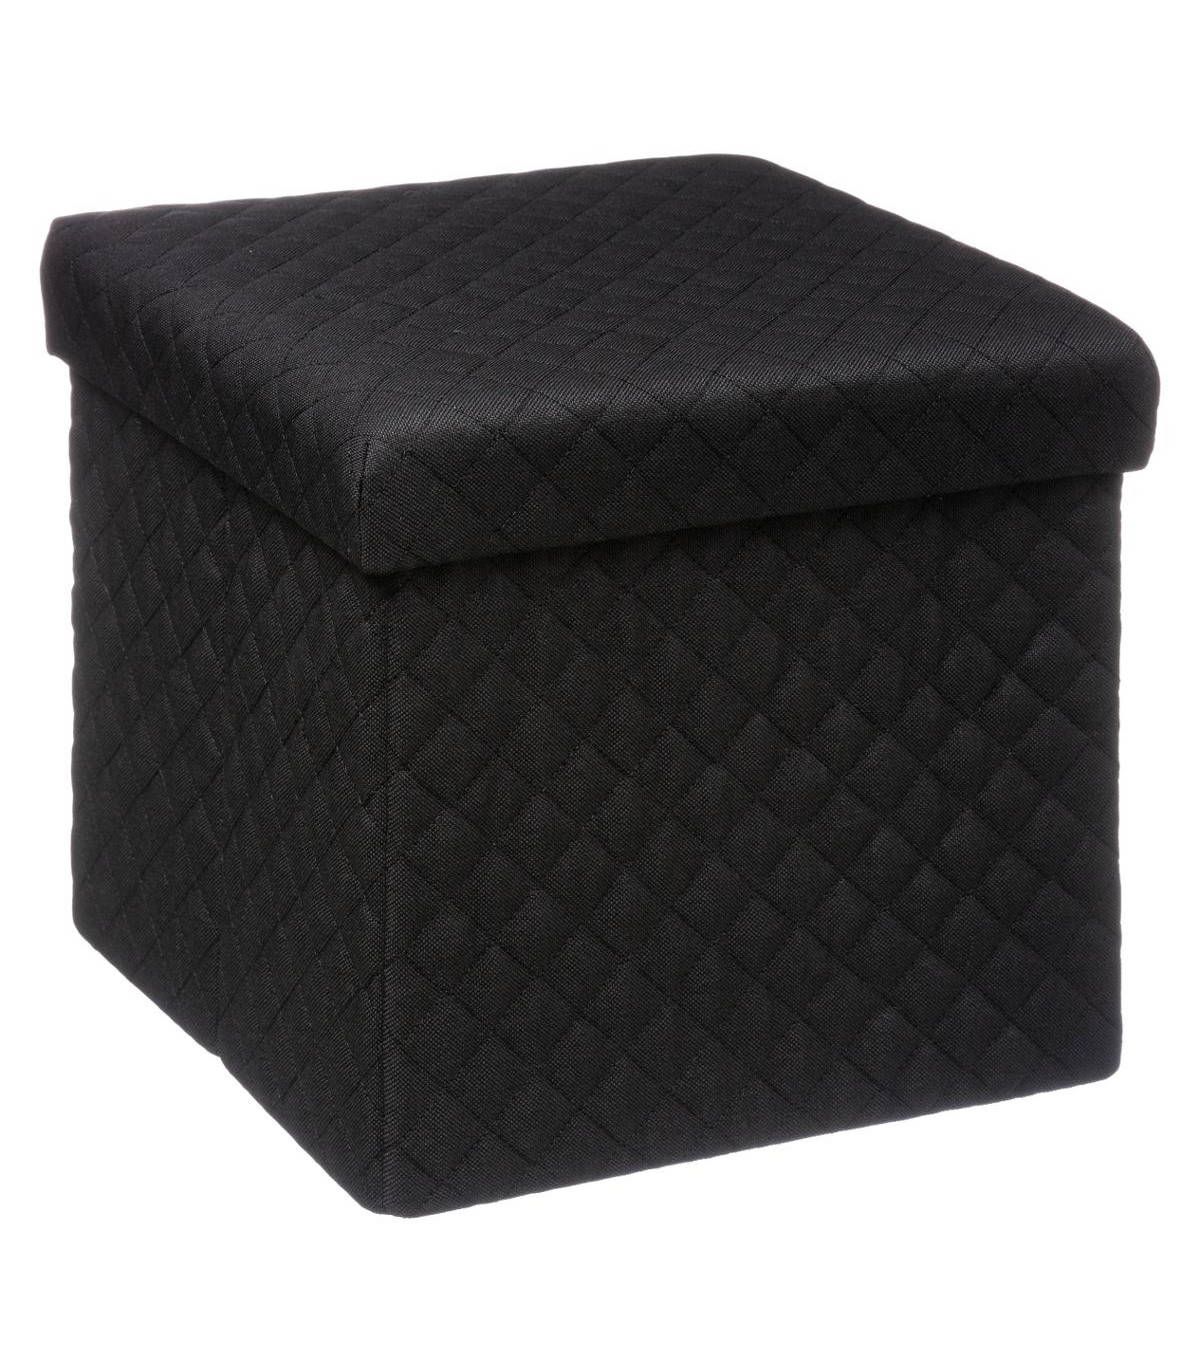 5five Simply Smart Stolička s úložným prostorem, černá, 31 x 30 x 31 cm - EMAKO.CZ s.r.o.